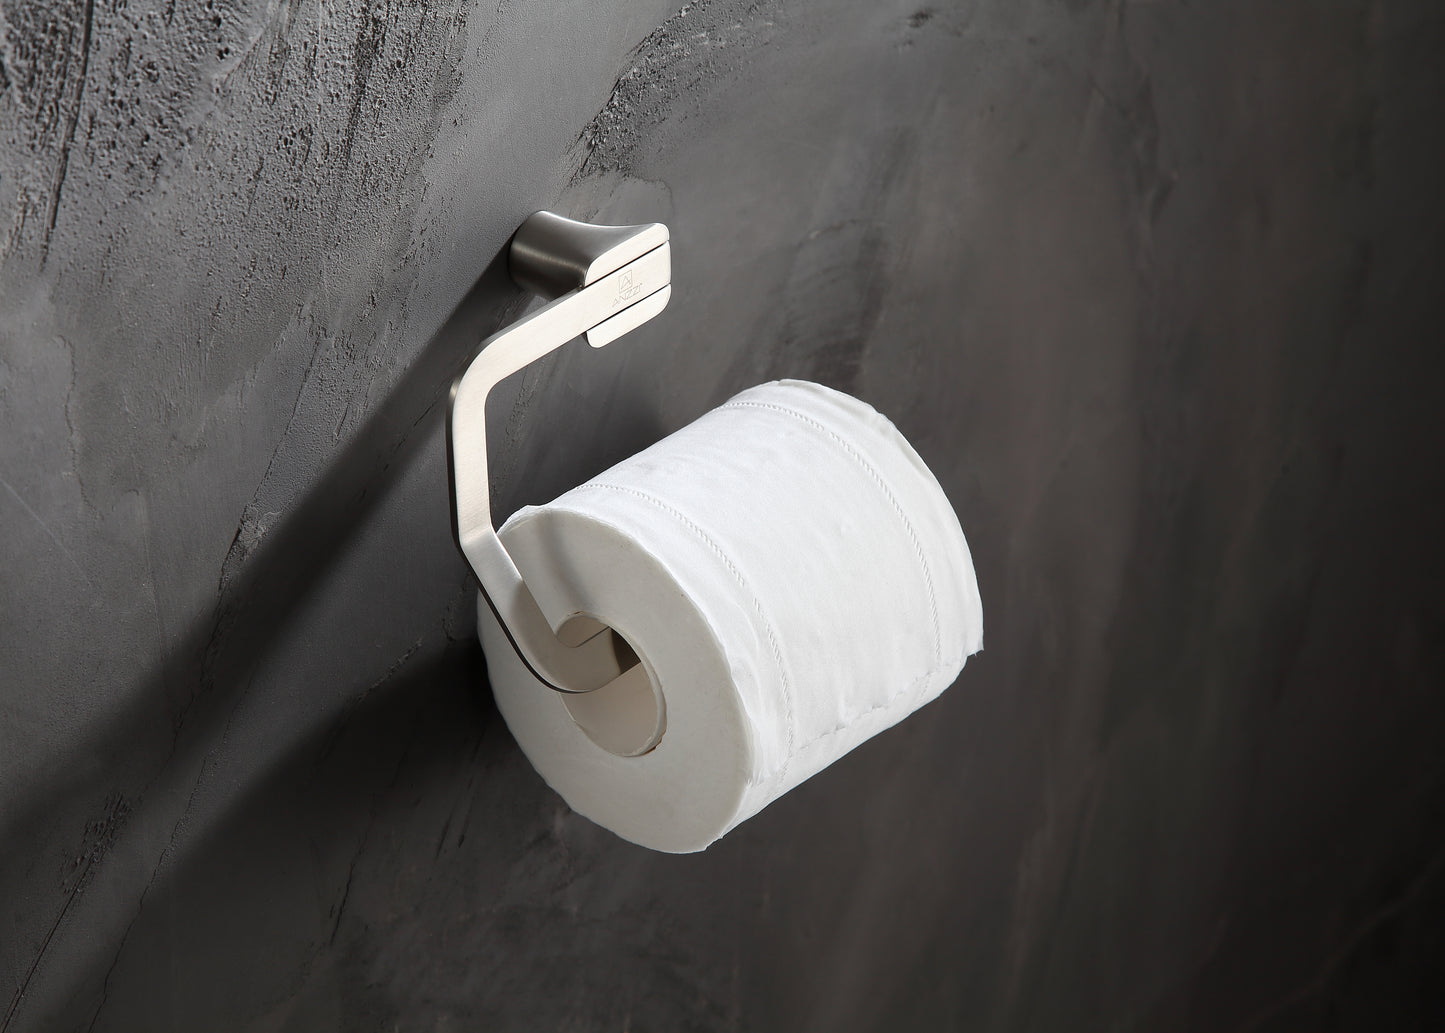 AC-AZ054BN - Essence Series Toilet Paper Holder in Brushed Nickel